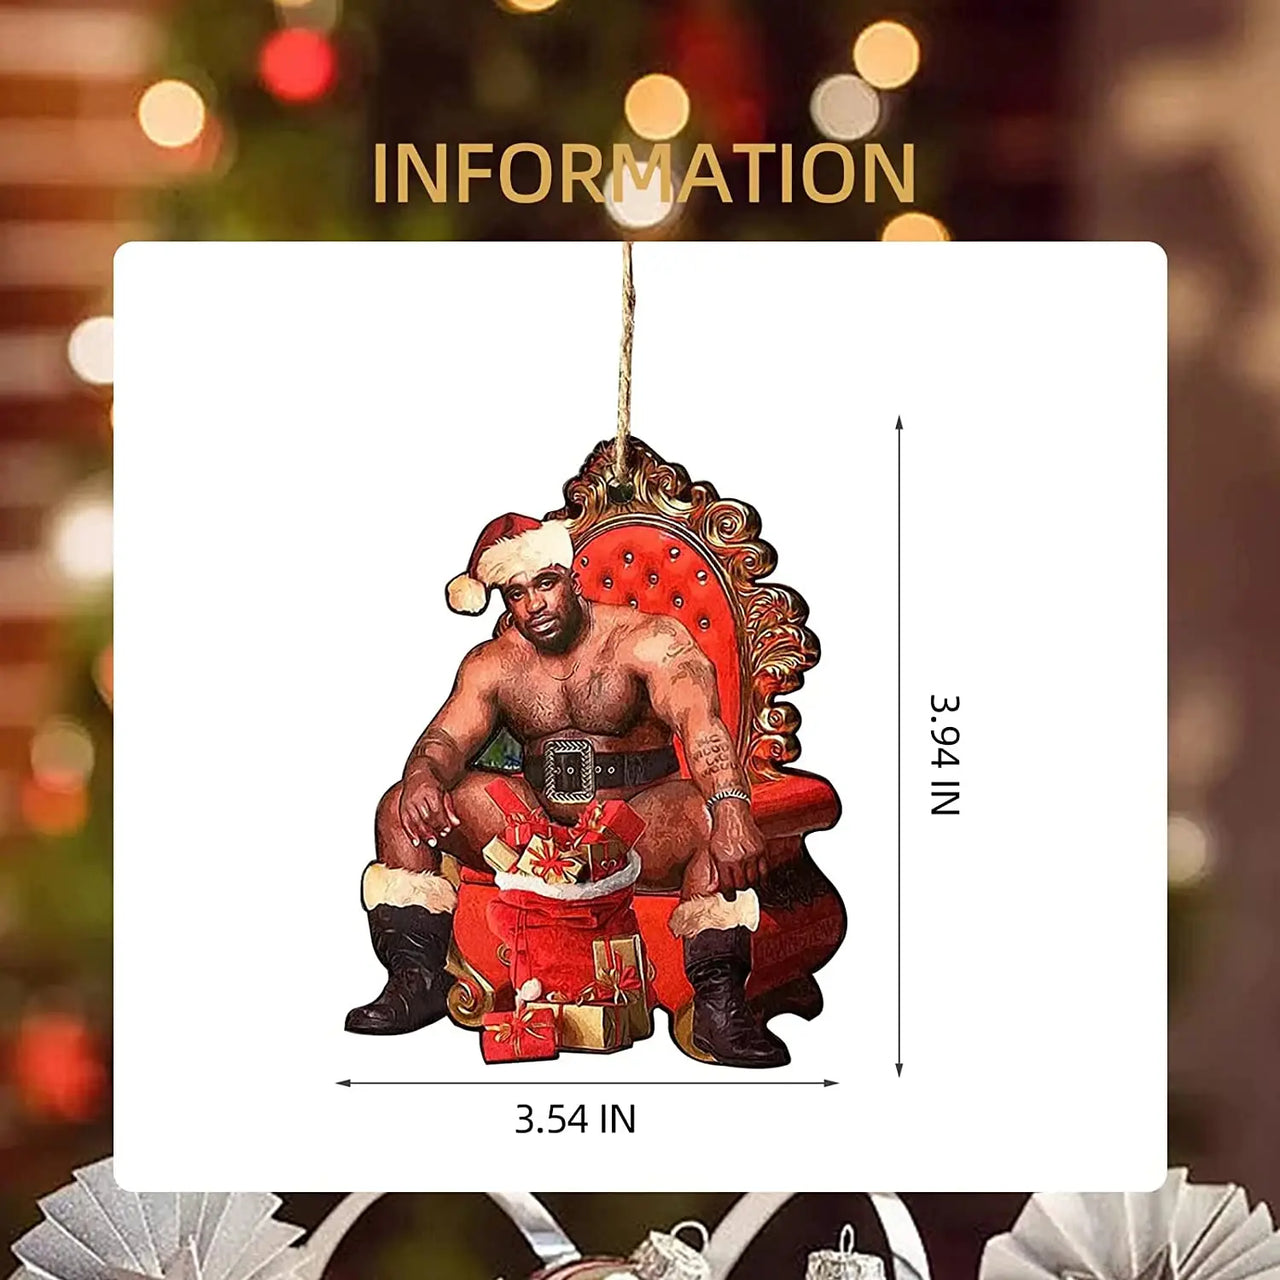 Handmade Barry Santa Wooden Christmas Ornament - A Festive Mr. Wood Meme - Comical Xmas Holiday 2D Gift